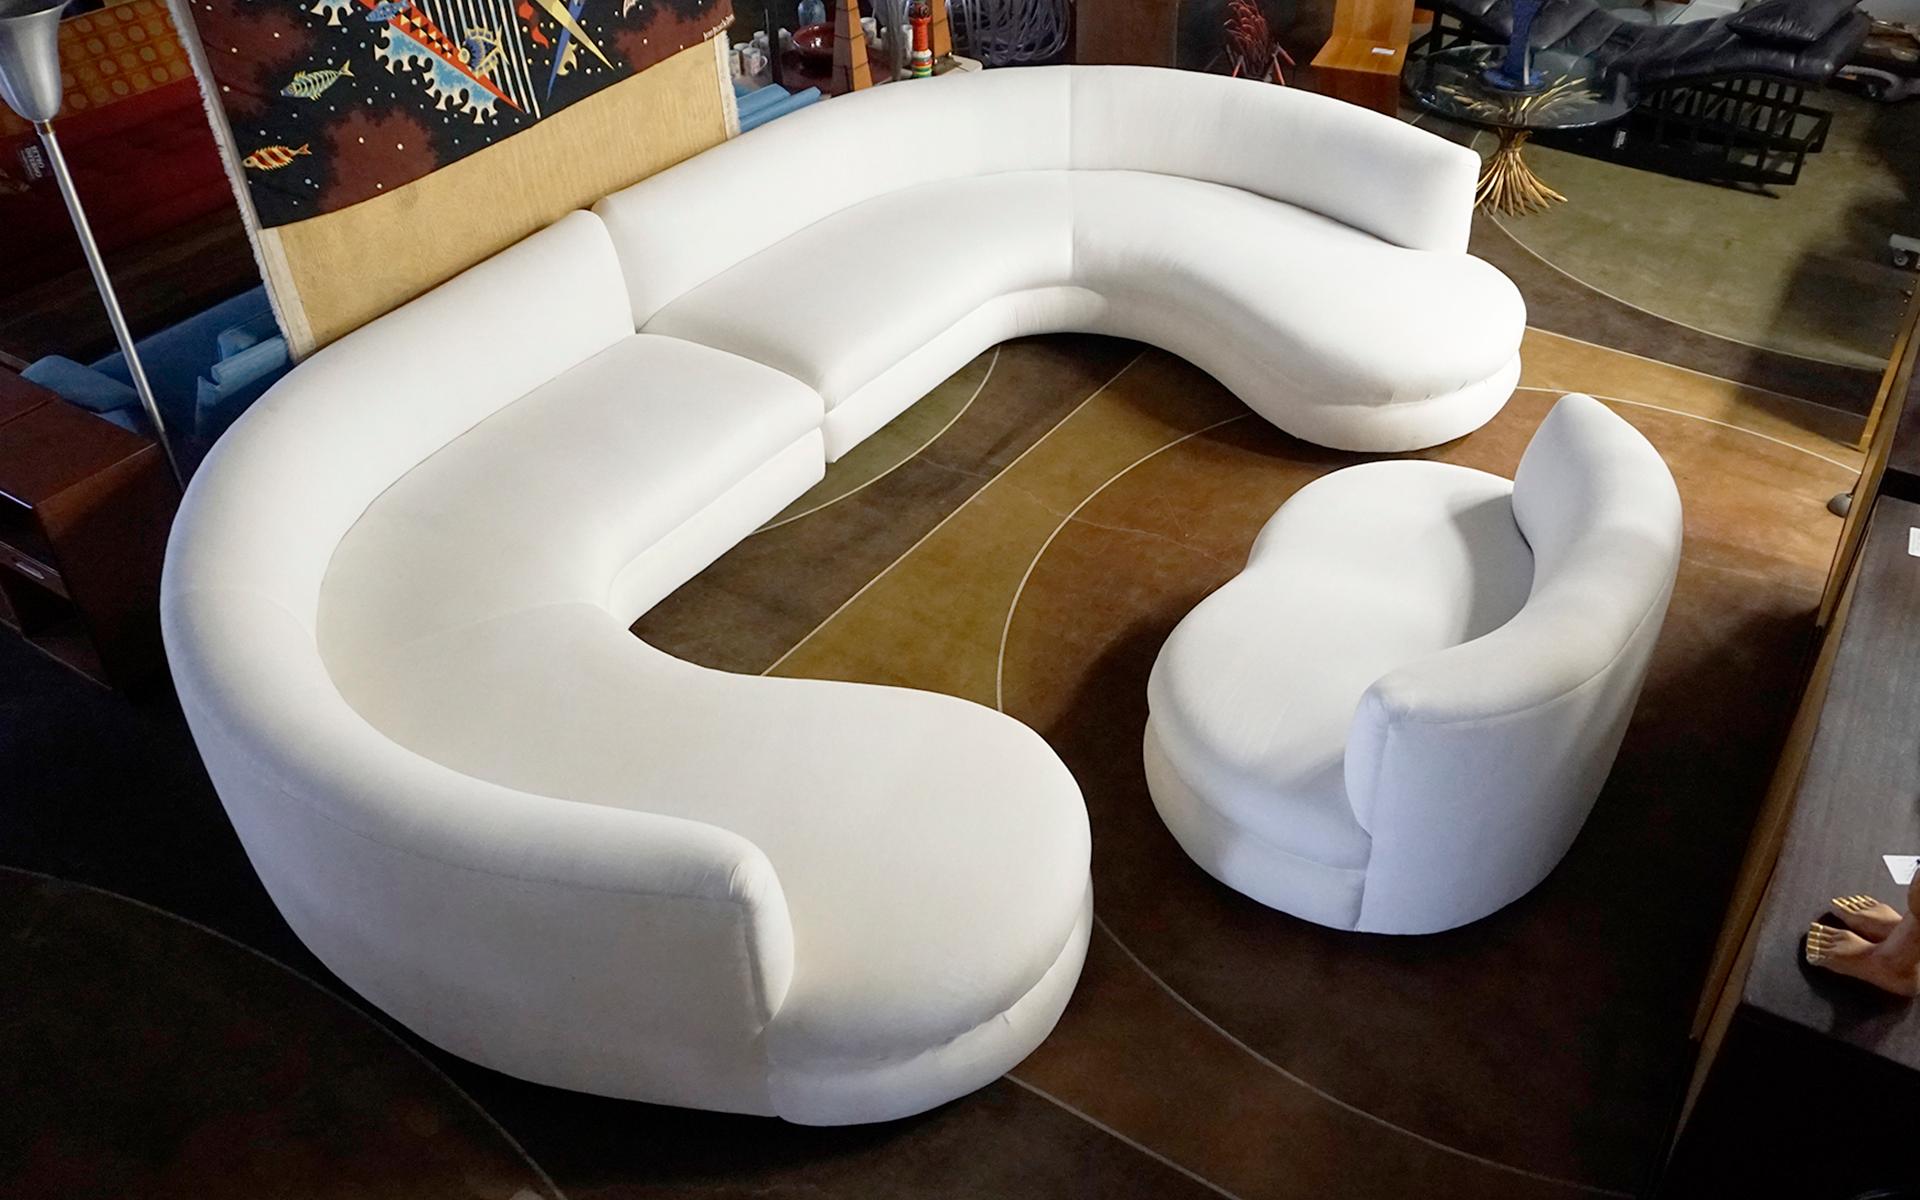 Large U shape Sectional Sofa in the Style of Vladimir Kagan's Cloud Sofa Designs 1